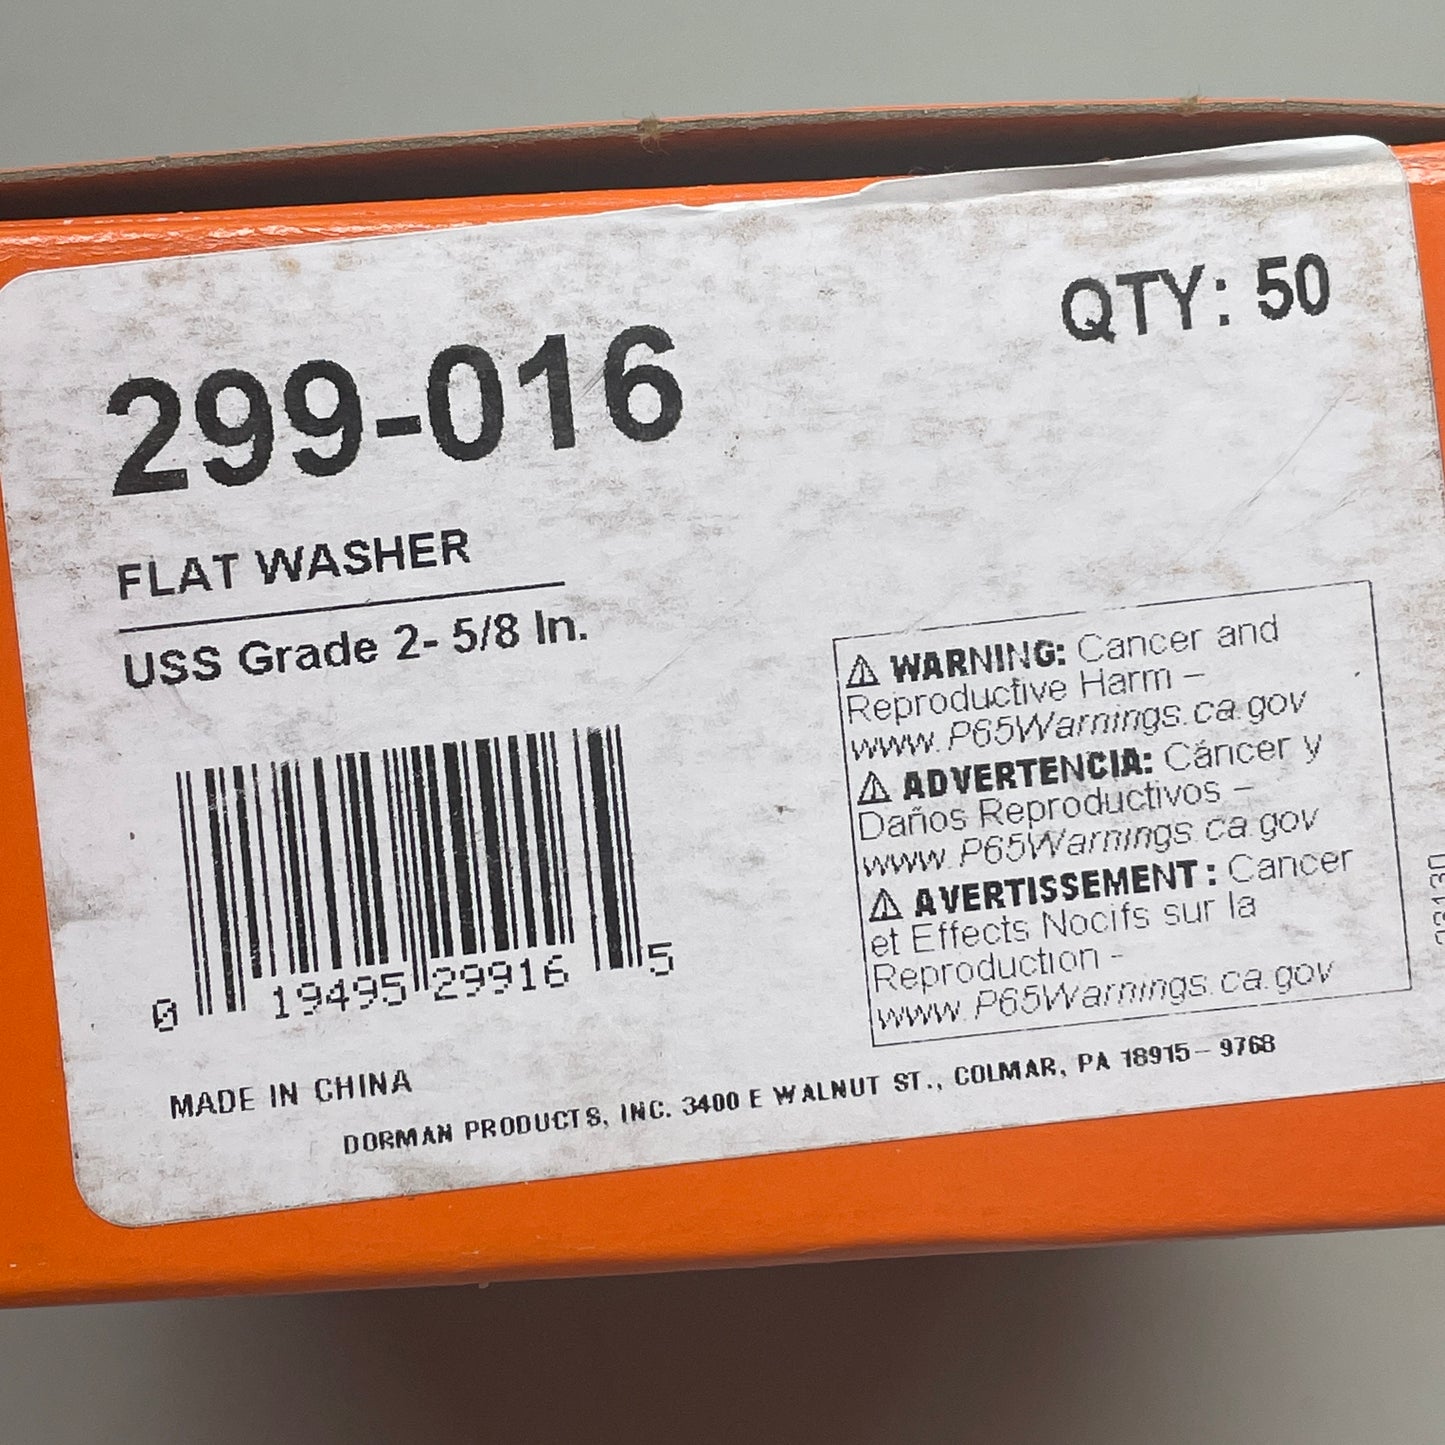 DORMAN (Box of 50) Flat Washers 299-016